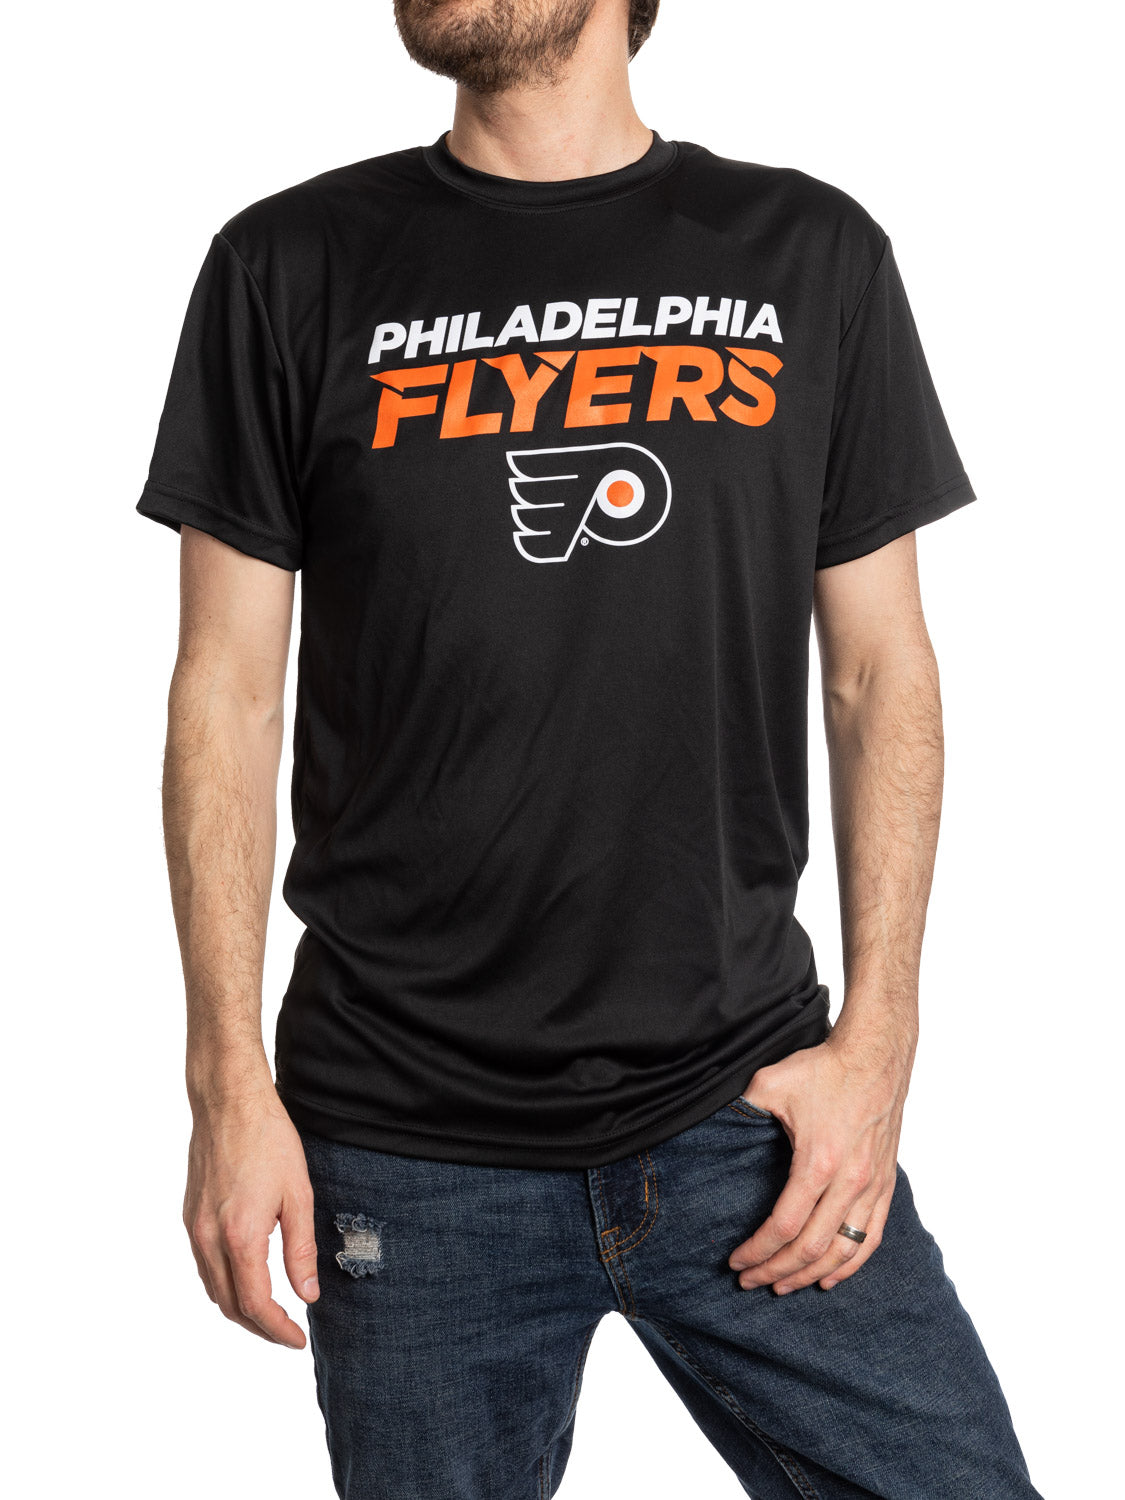 Philadelphia Flyers Short Sleeve Rashguard T Shirt - Alternate Logo